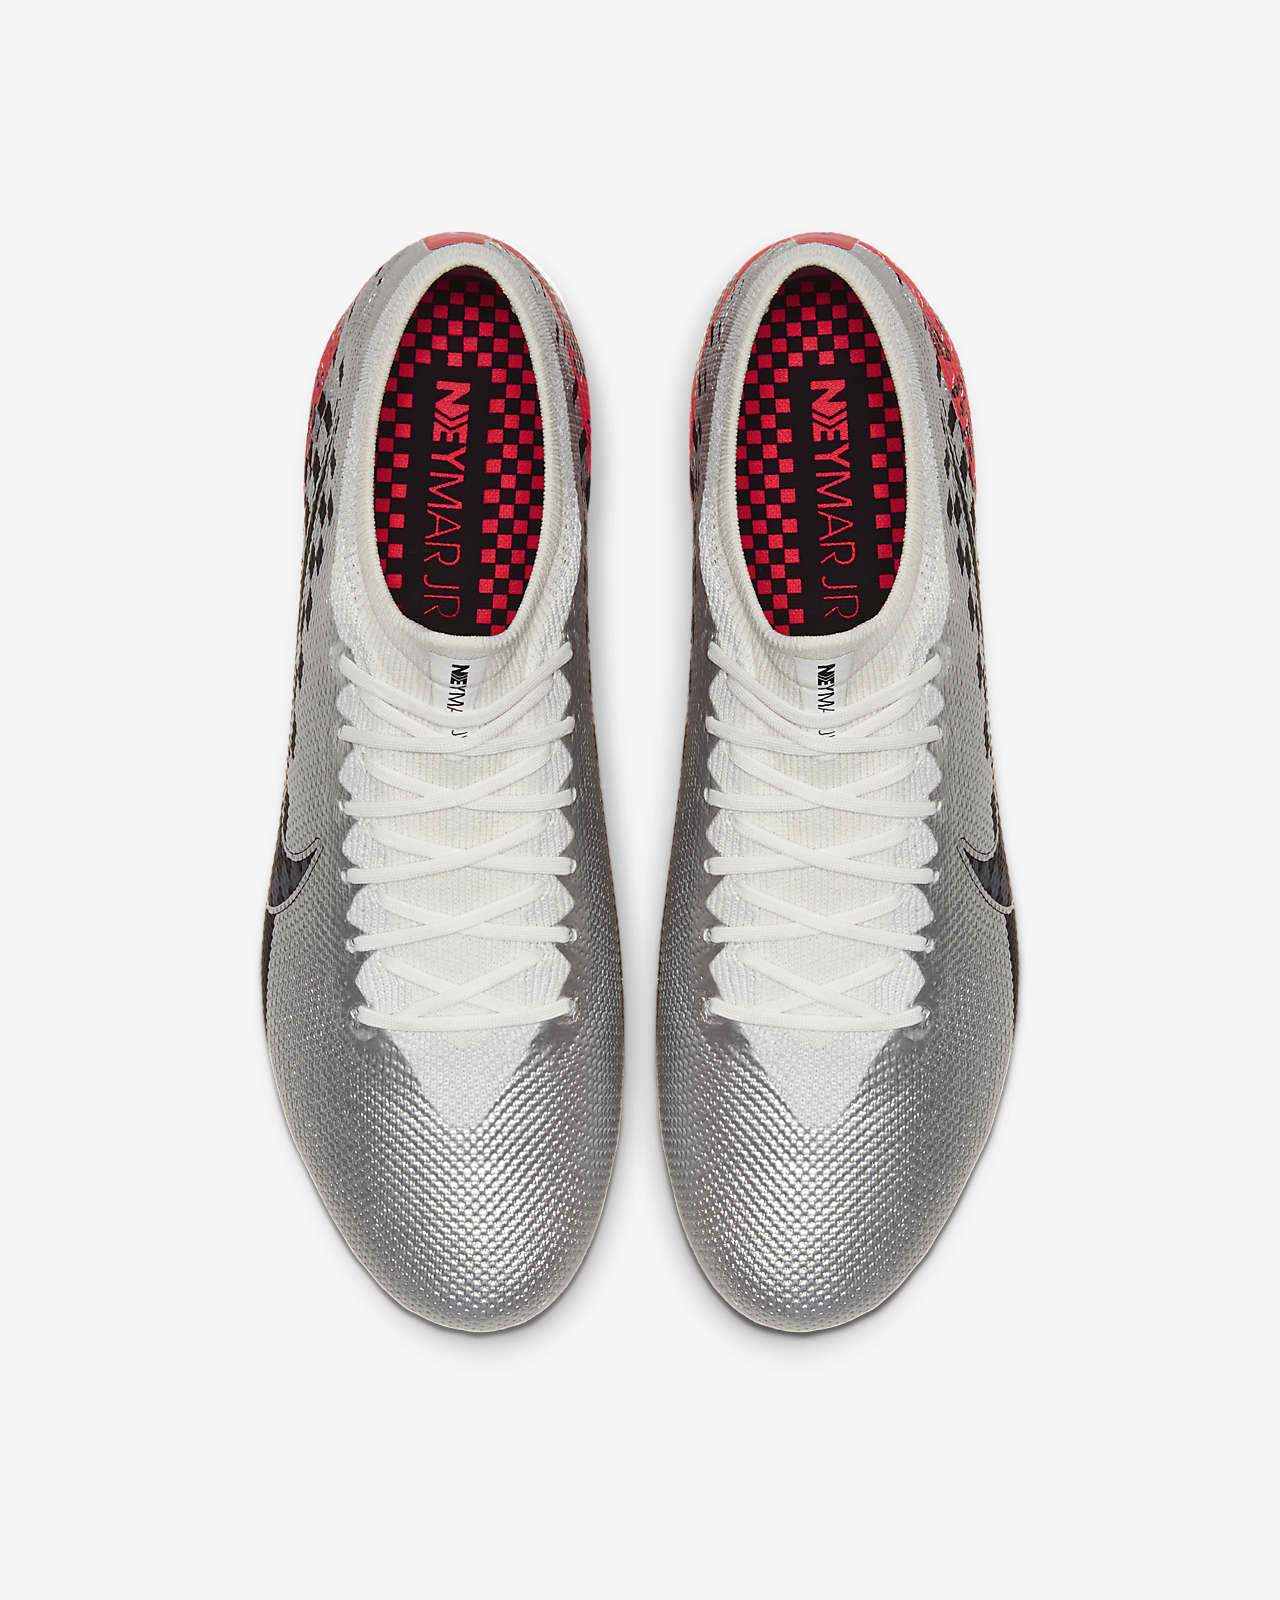 Nike Mercurial Vapor 13 Pro Neymar Jr. Football Boots. LU